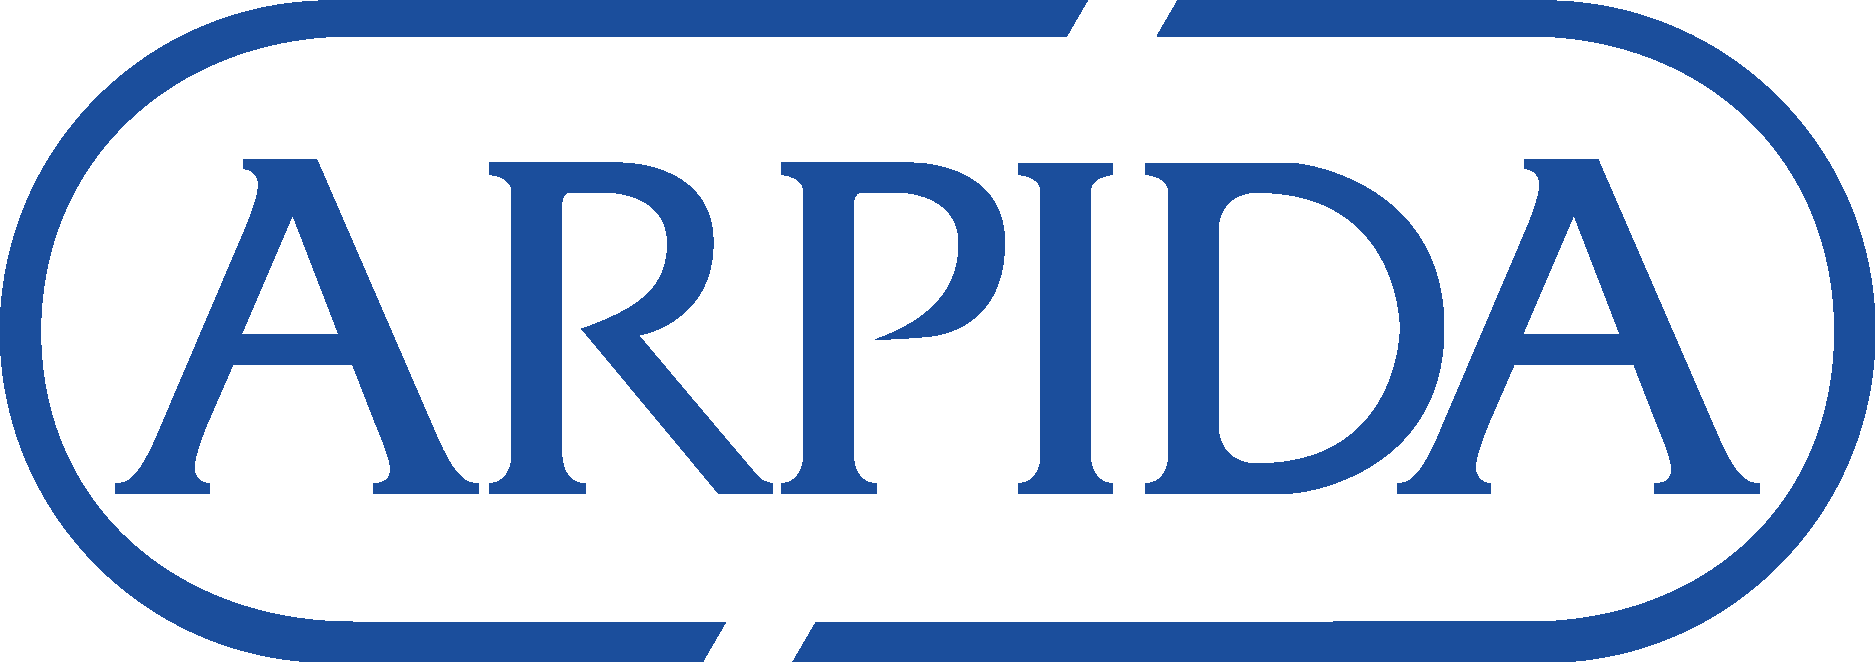 Arpida Logo Vector